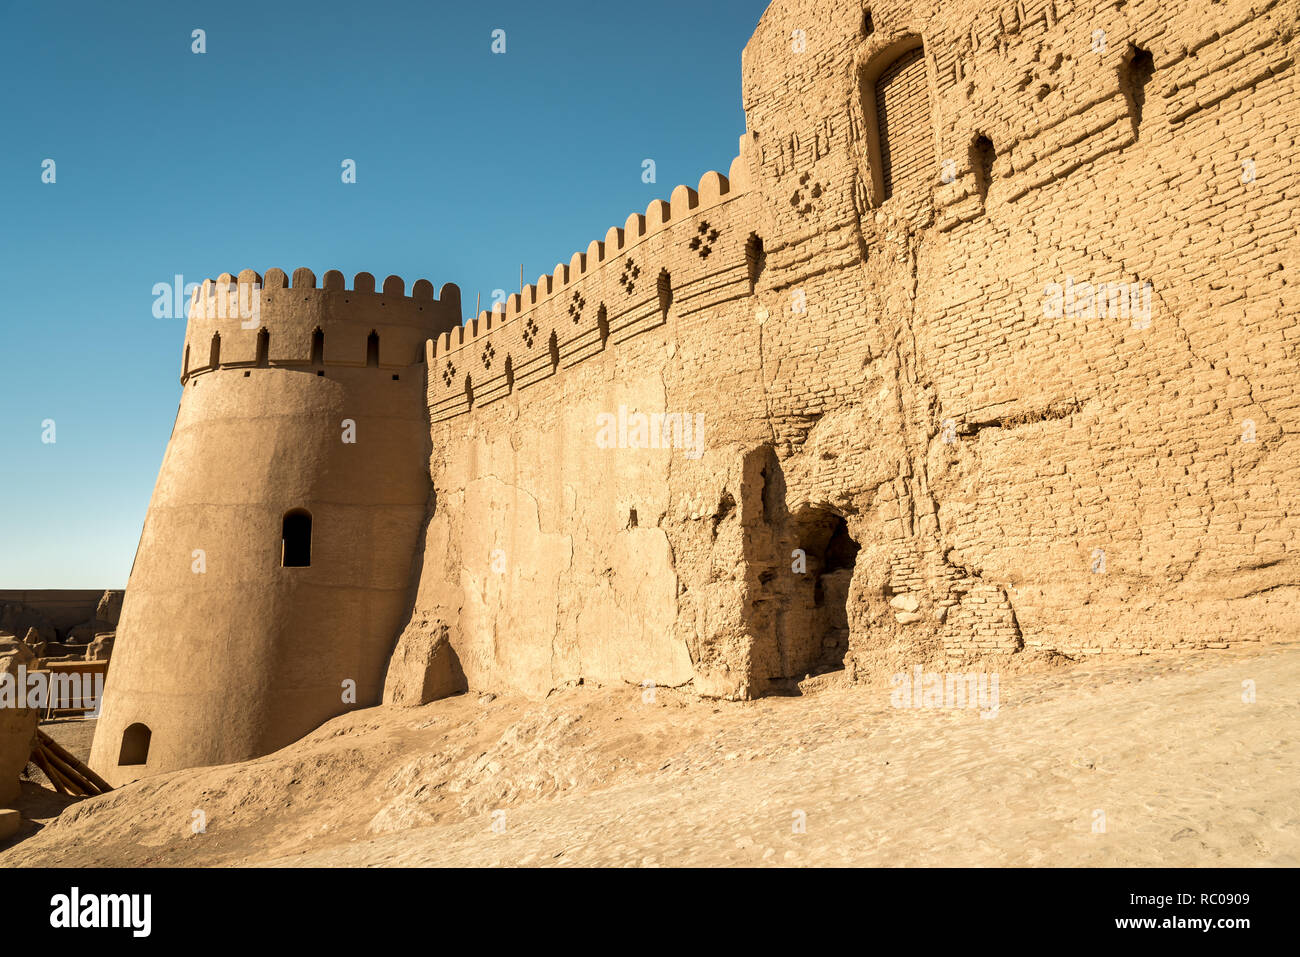 View of Arg-e Bam - Bam Citadel, near city of Kerman, rebuilt after earthquake, Iran Stock Photo